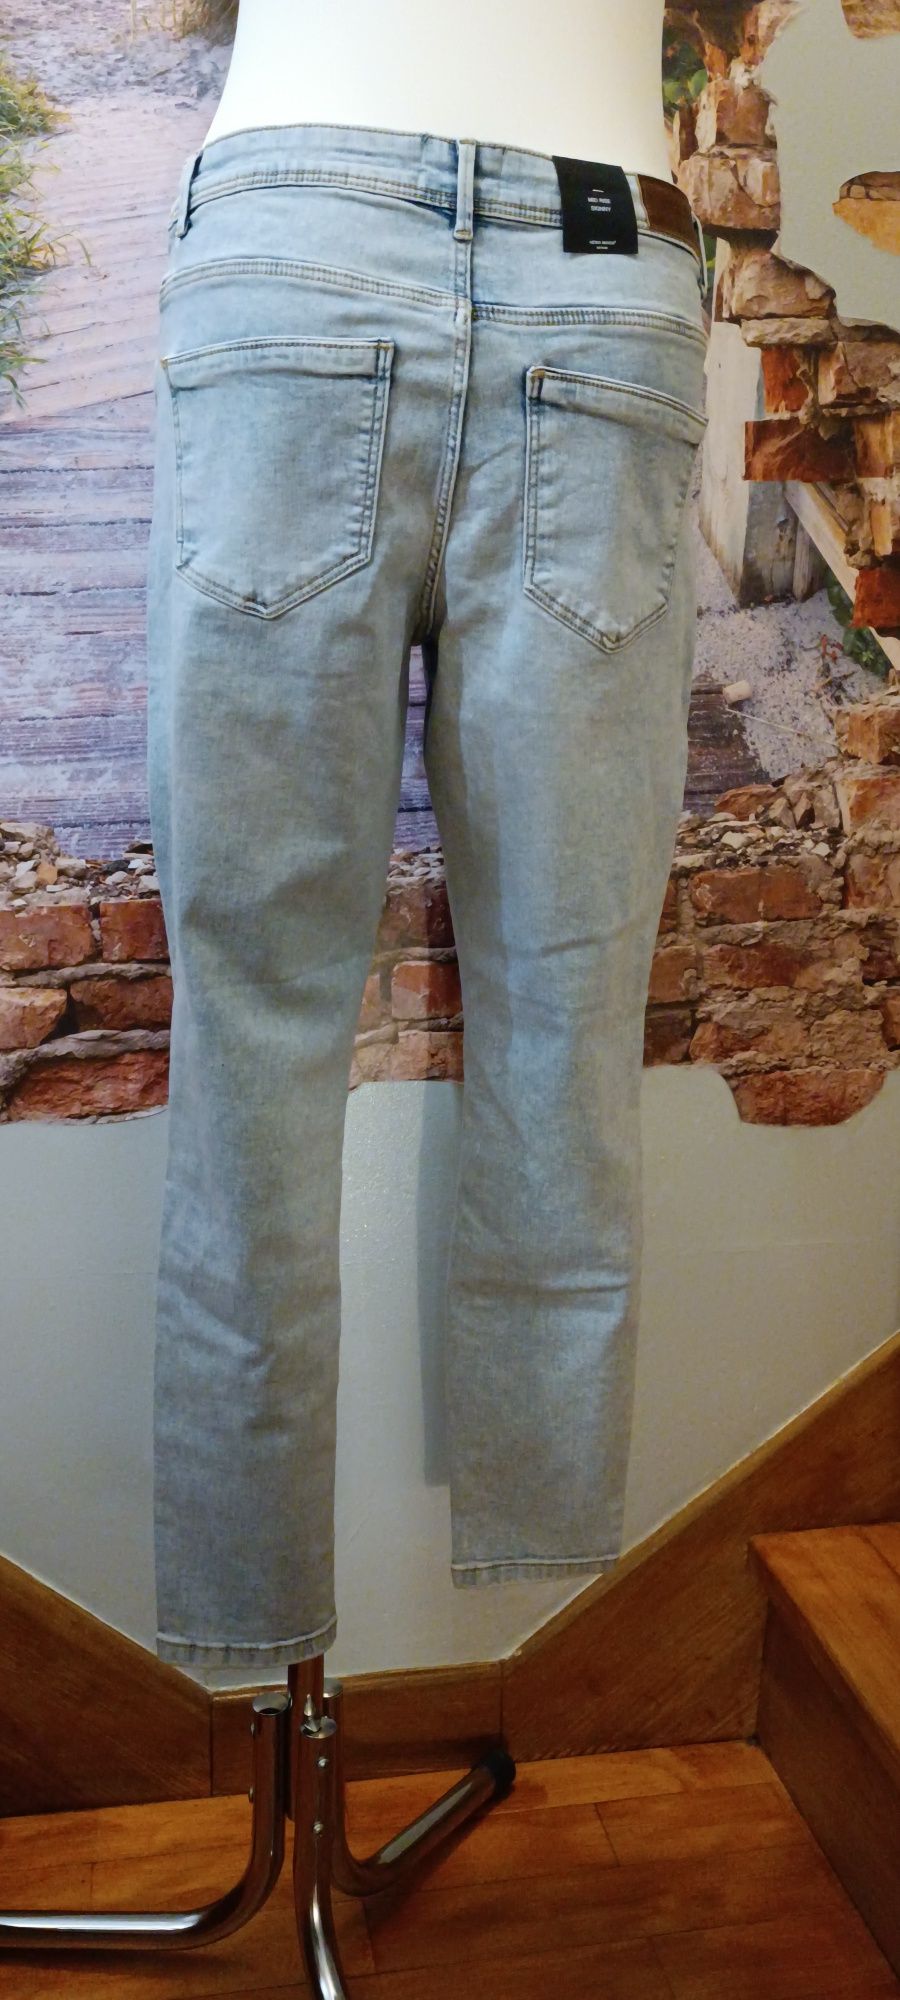 VERO MODA Spodnie jasne jeans damskie r. L z Metką